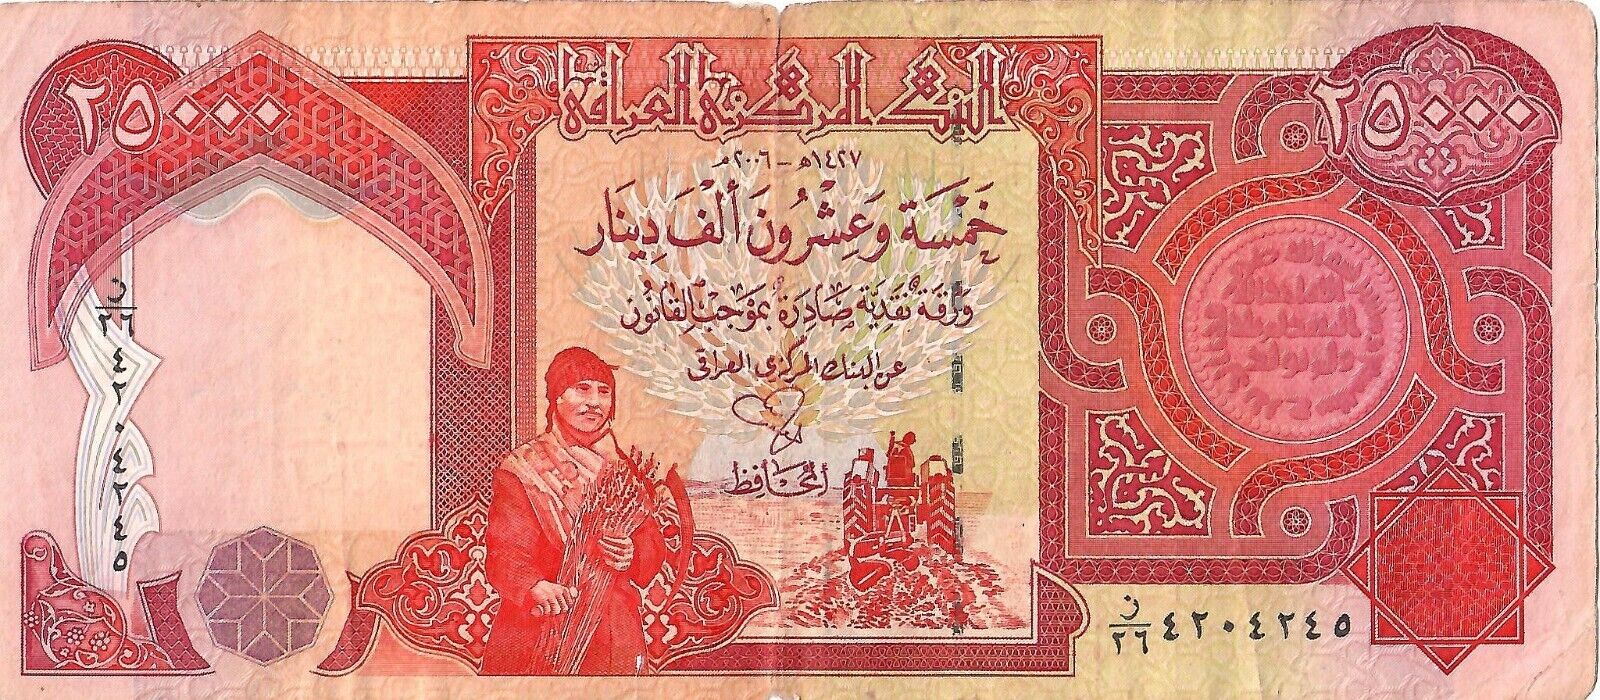 Iraq 25,000 Dinars Banknote, 2006, P-96c, Cir